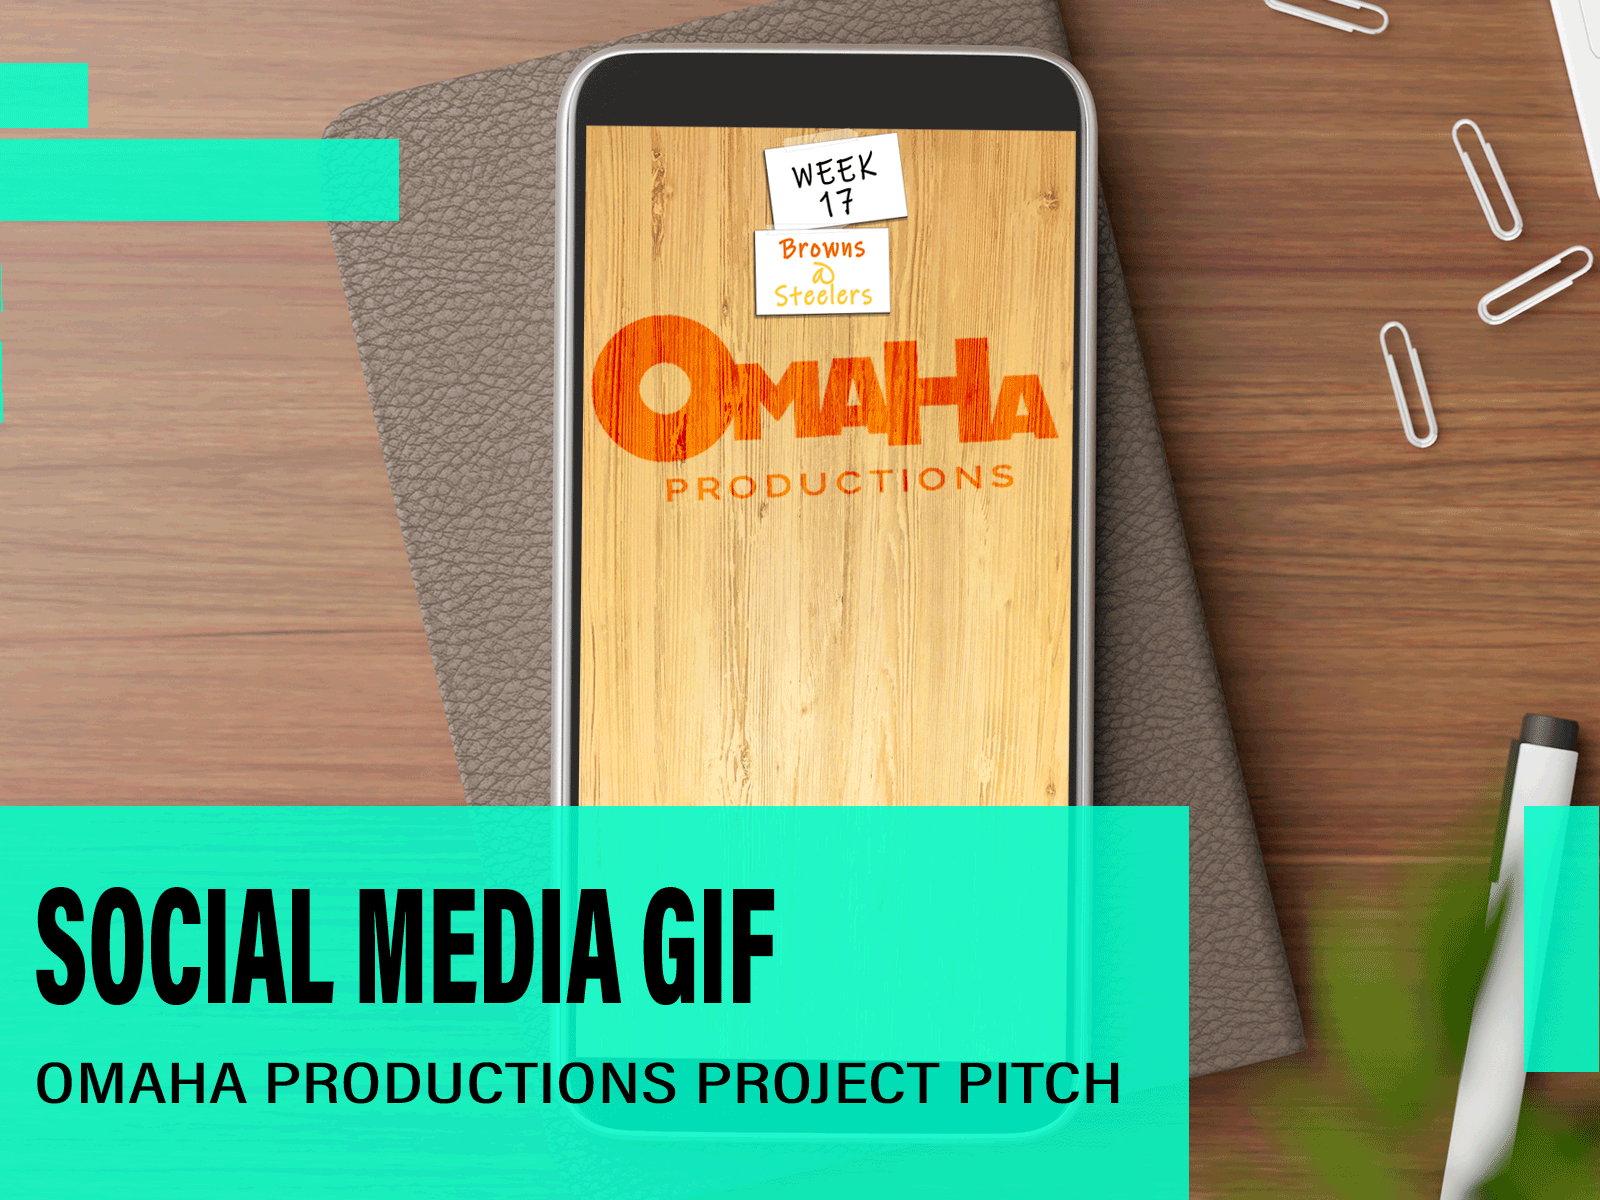 Omaha Productions